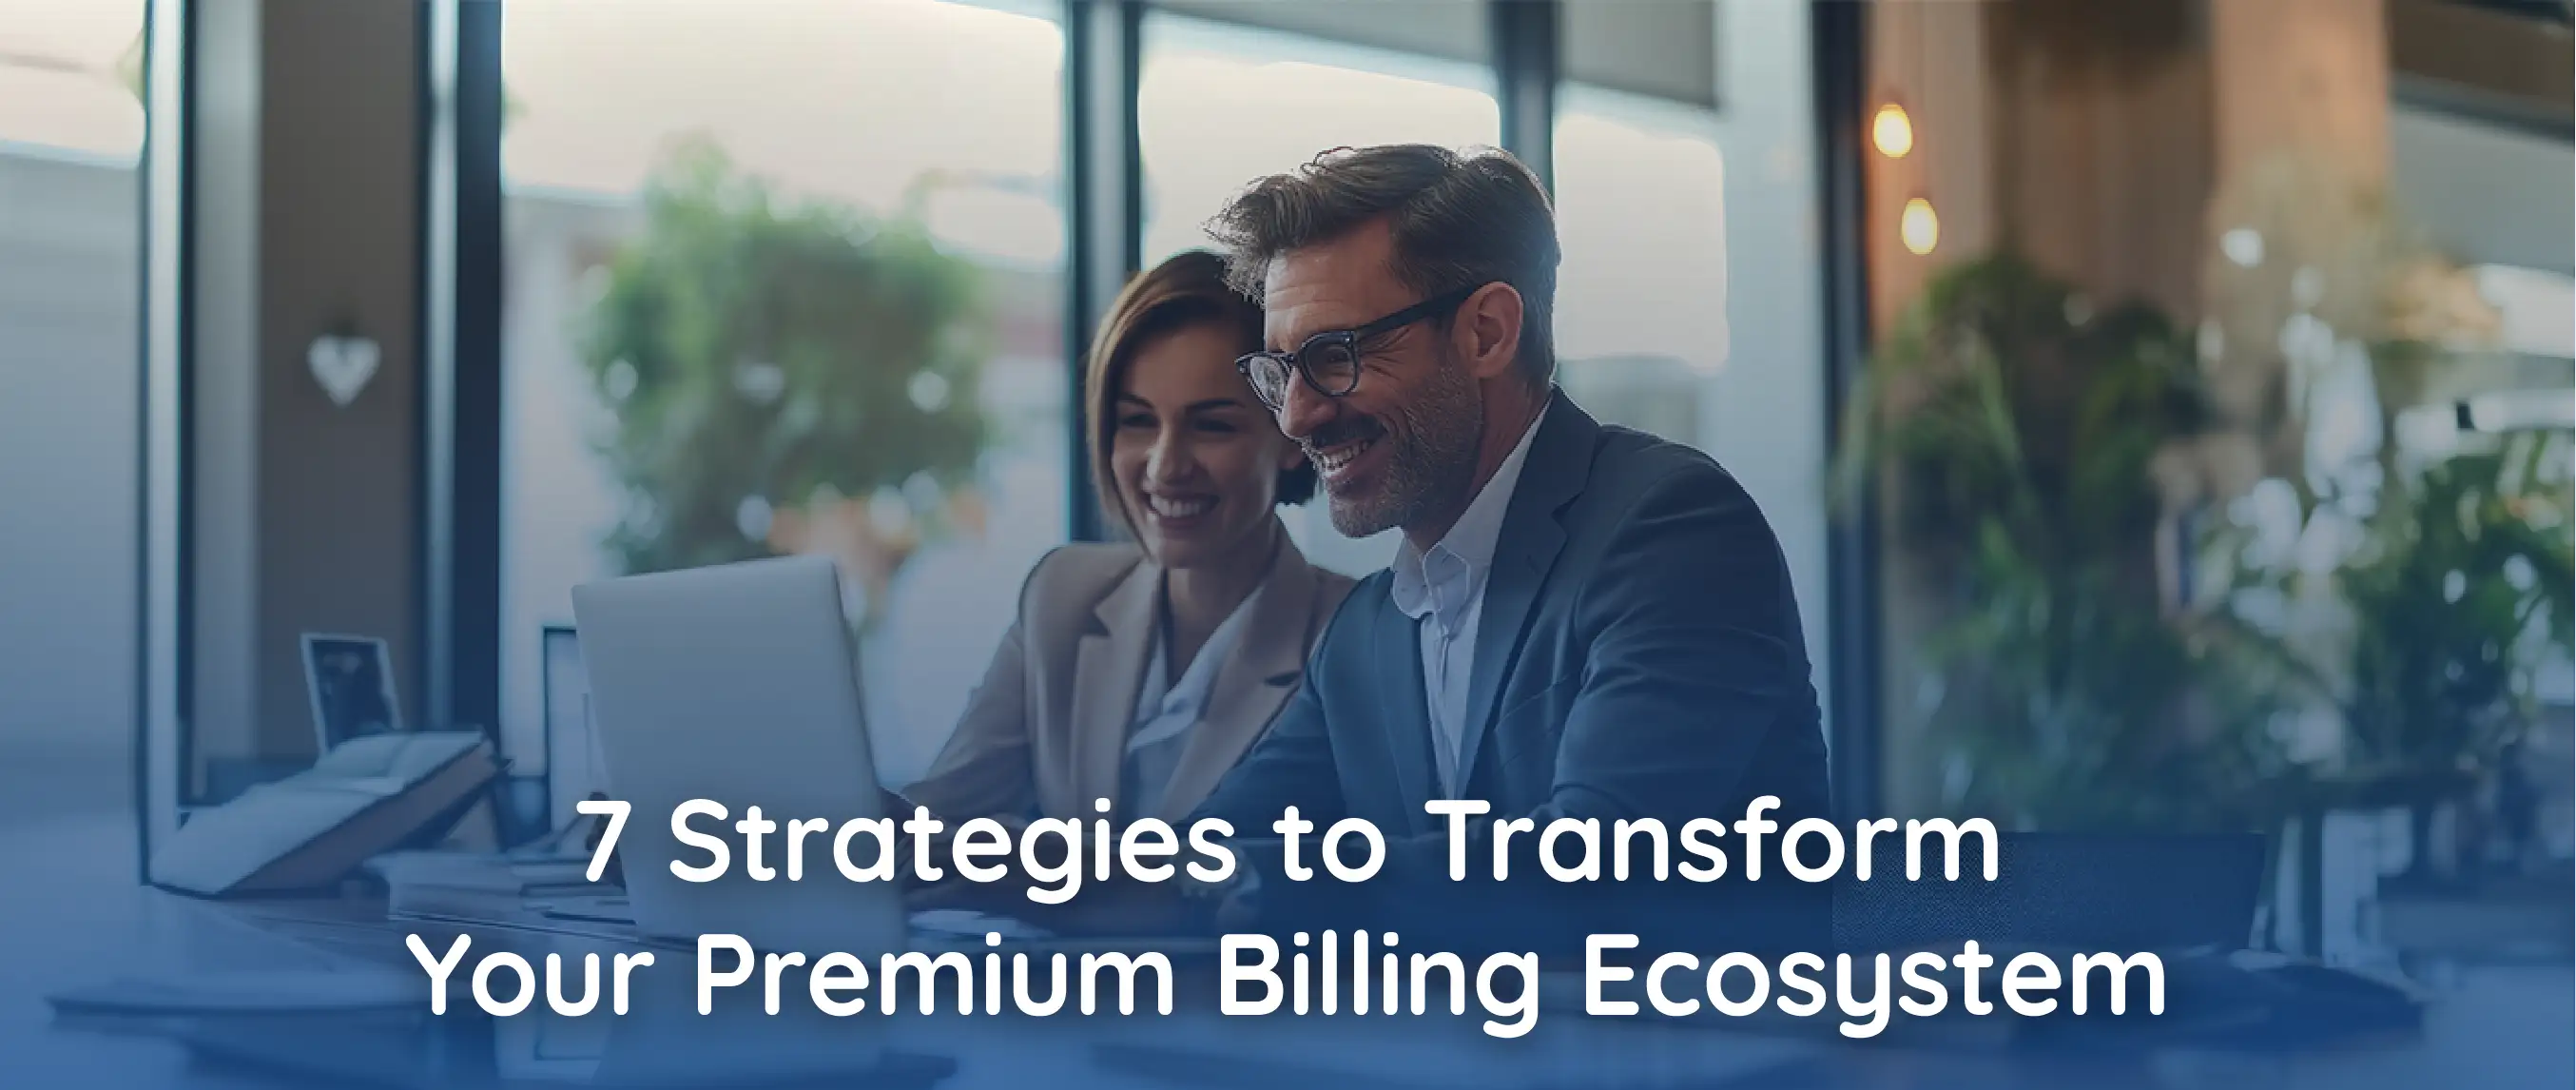 7 Strategies to Transform Your Premium Billing Ecosystem 